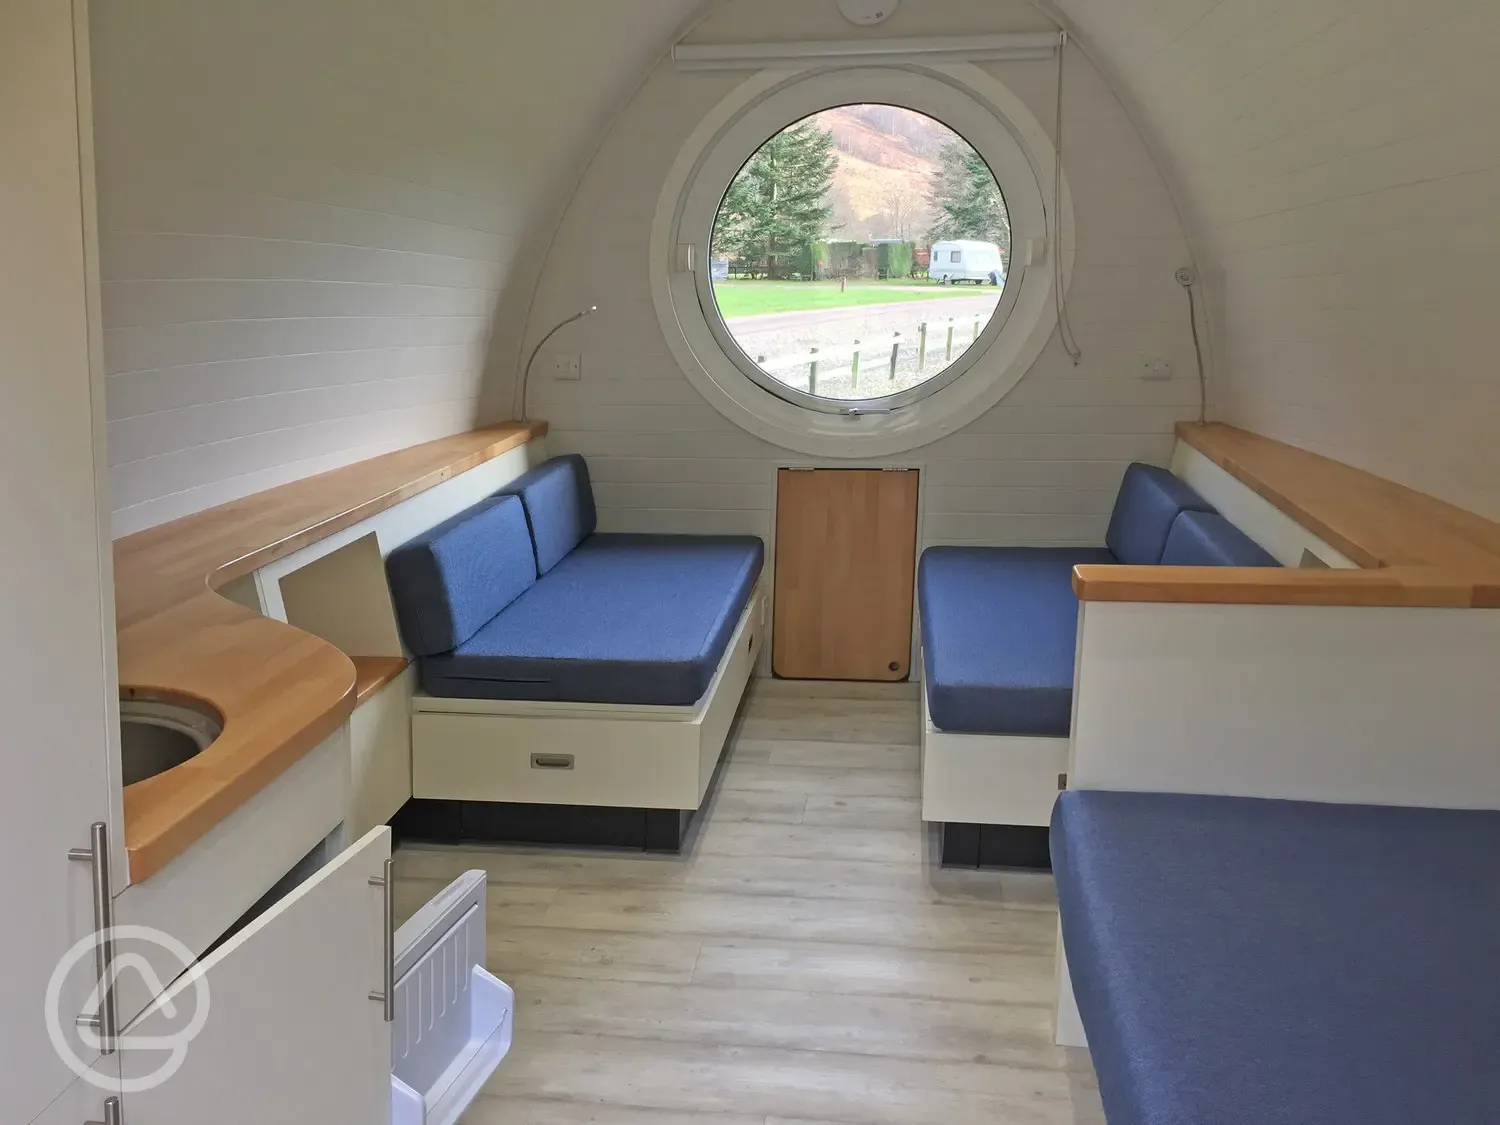 Camping pod interior